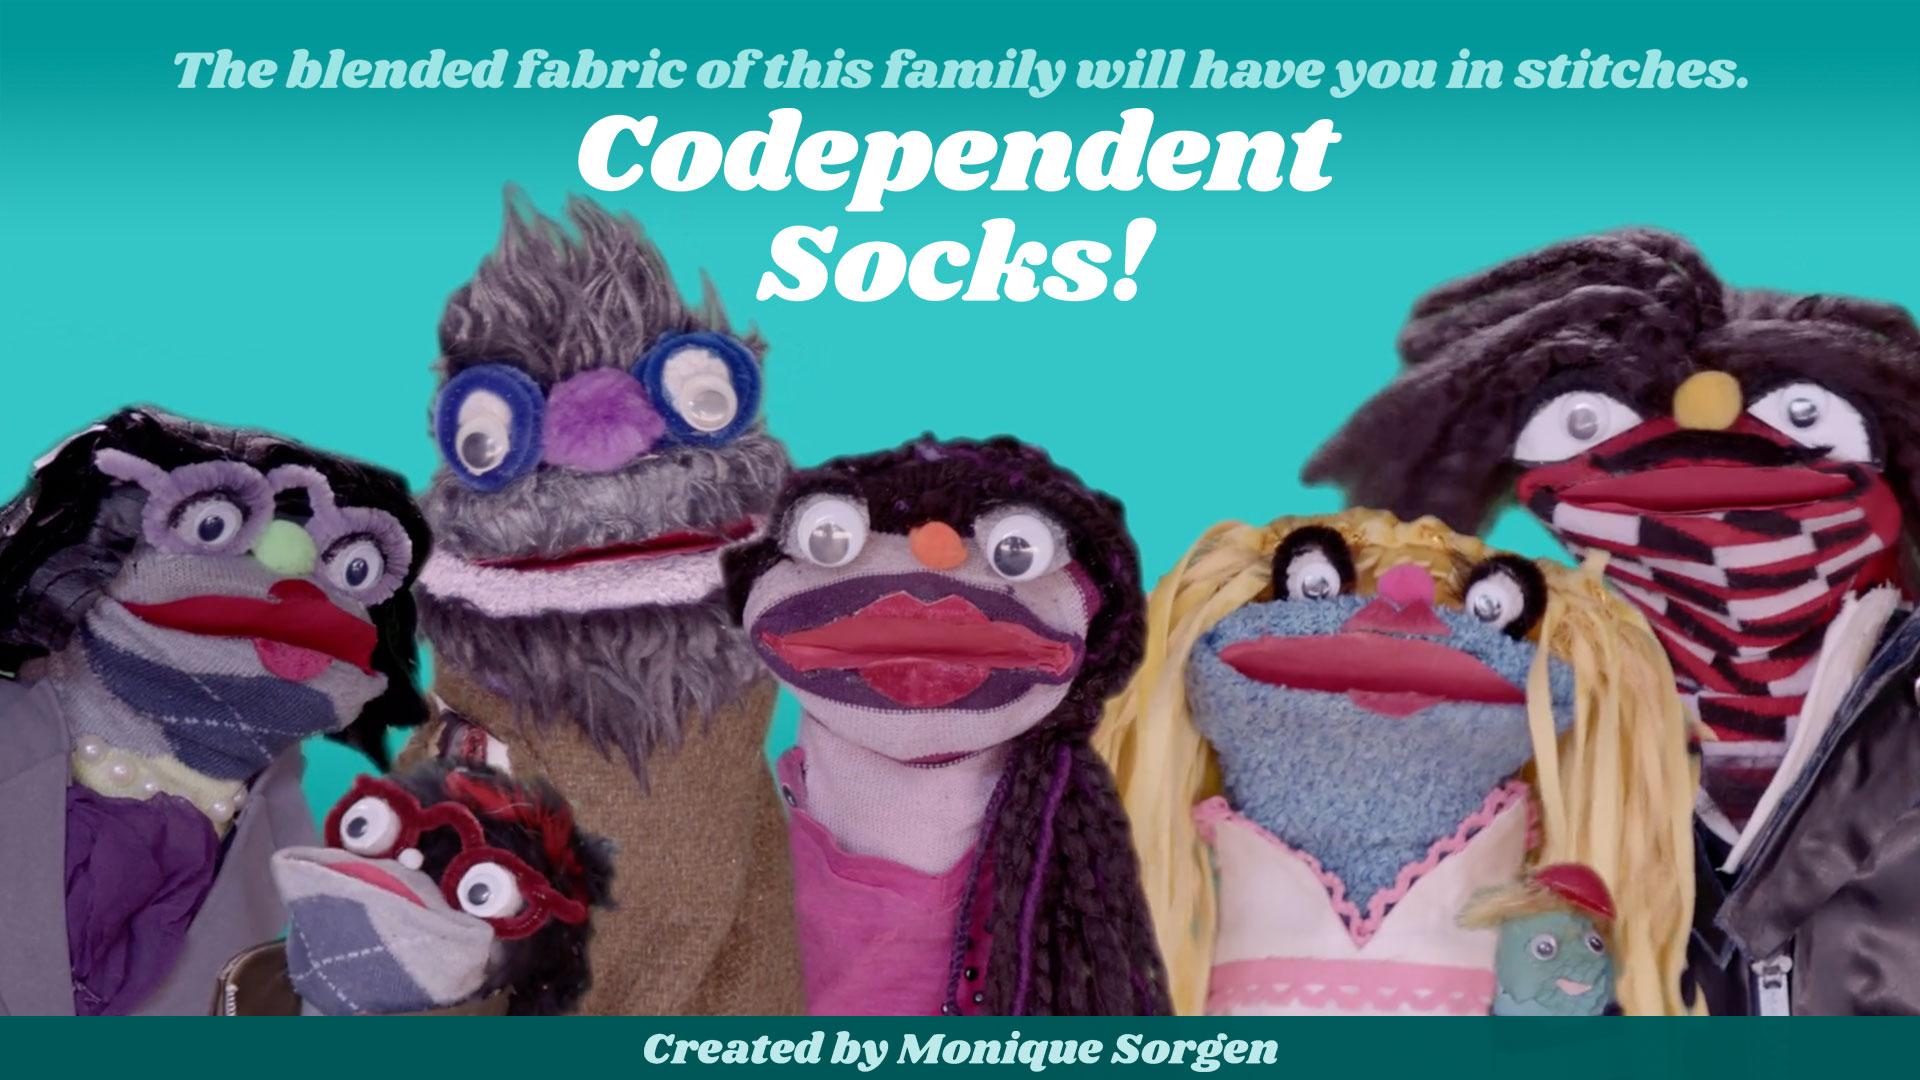 Codependent Socks!